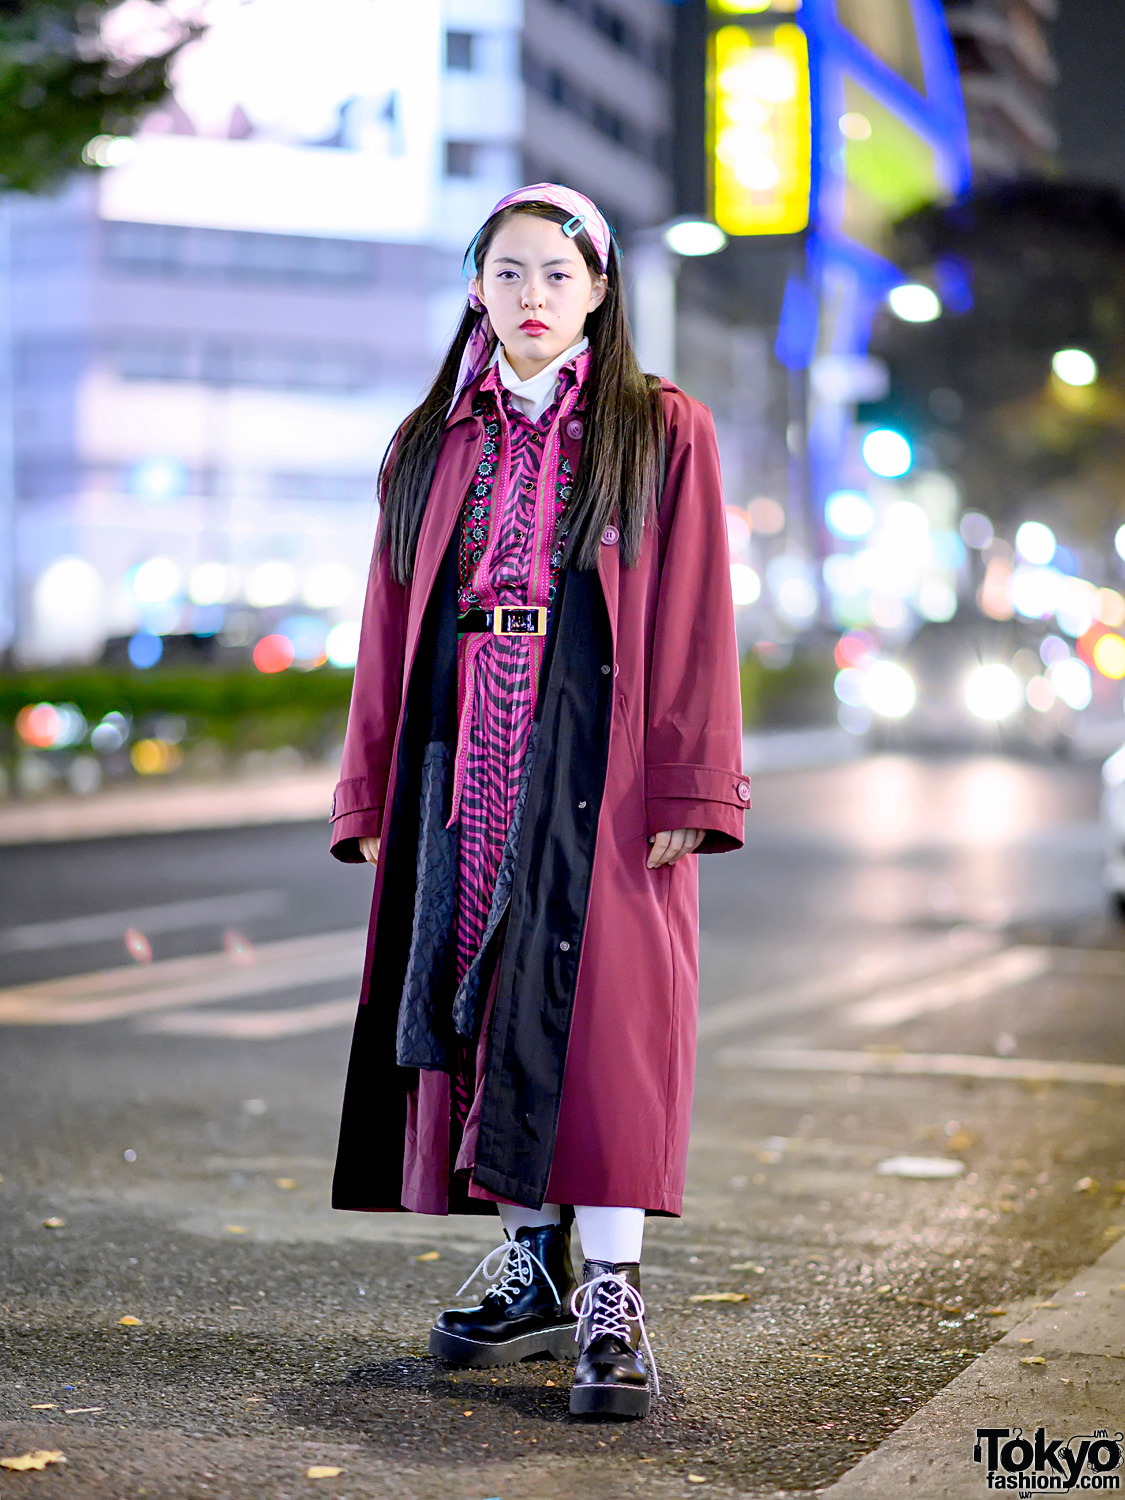 Harajuku Girl in RRR Vintage Purple Coat, Vintage Animal Print Dress, Floral Vest, Headscarf & Boots